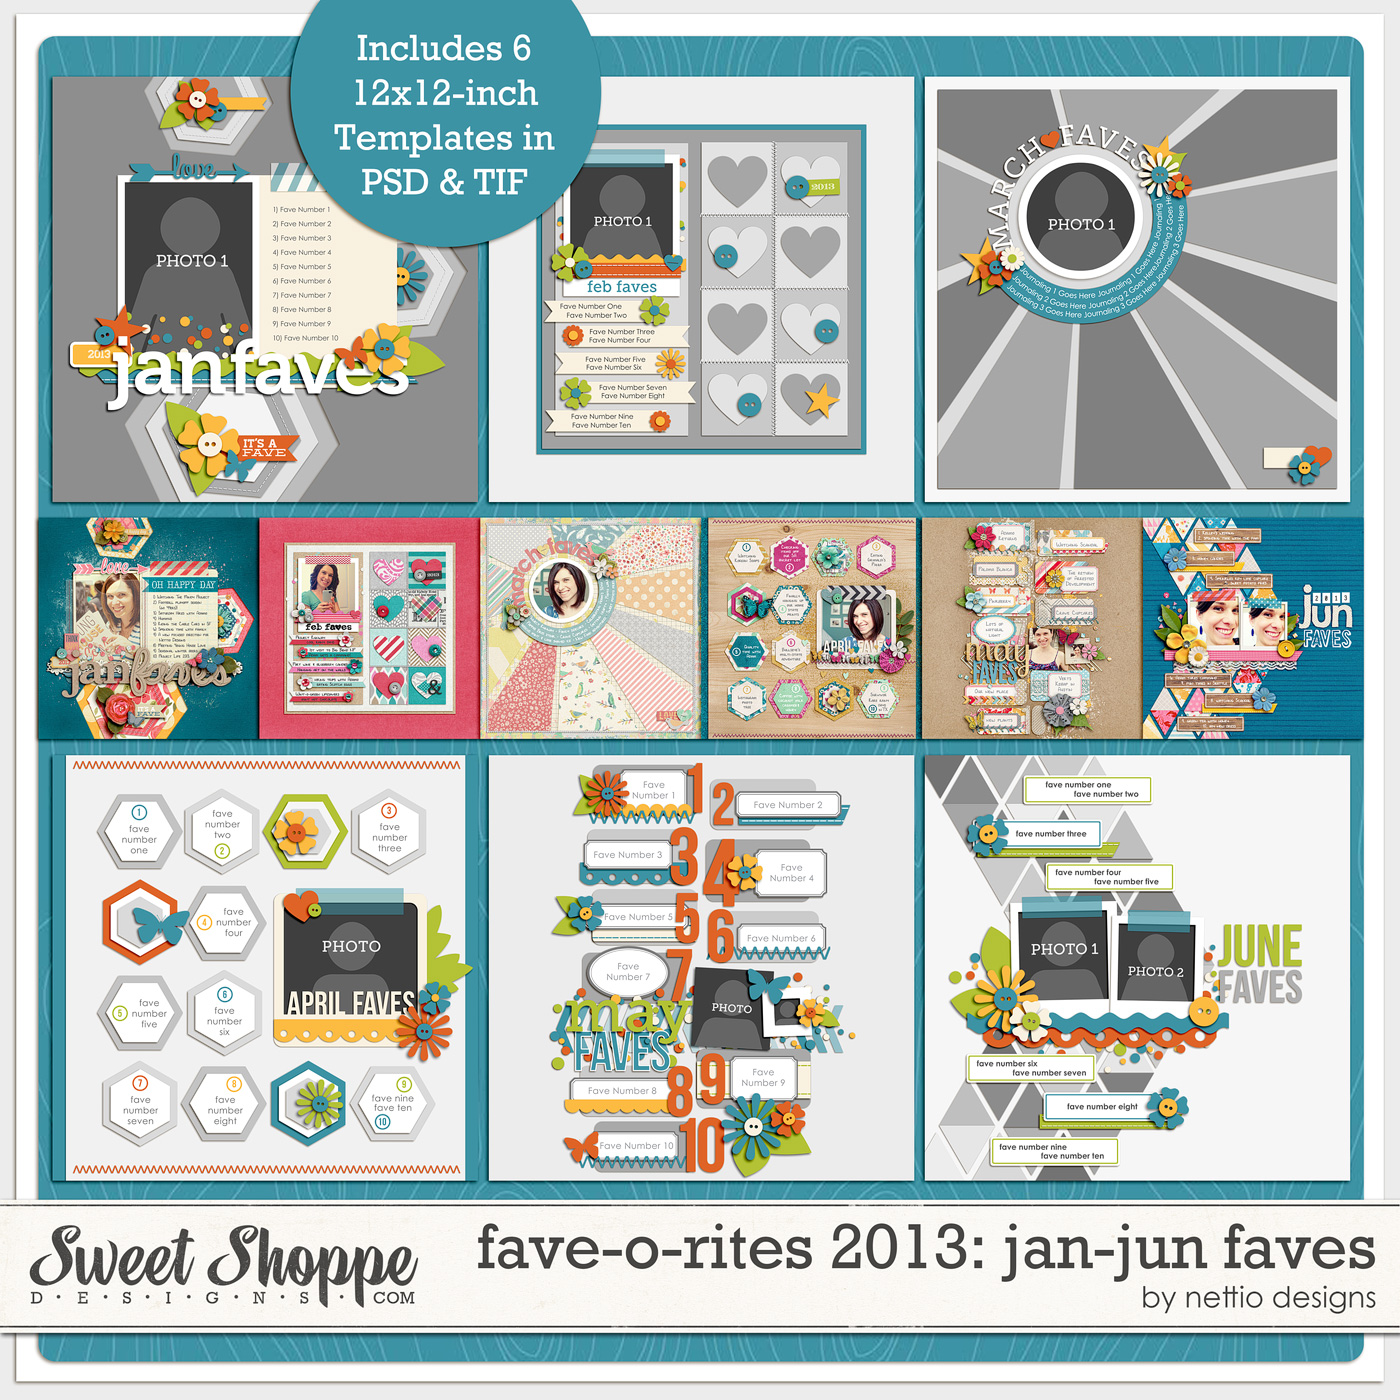 nettiodesigns_FAVE-O-RITES2013_Jan-Jun-preview-1400